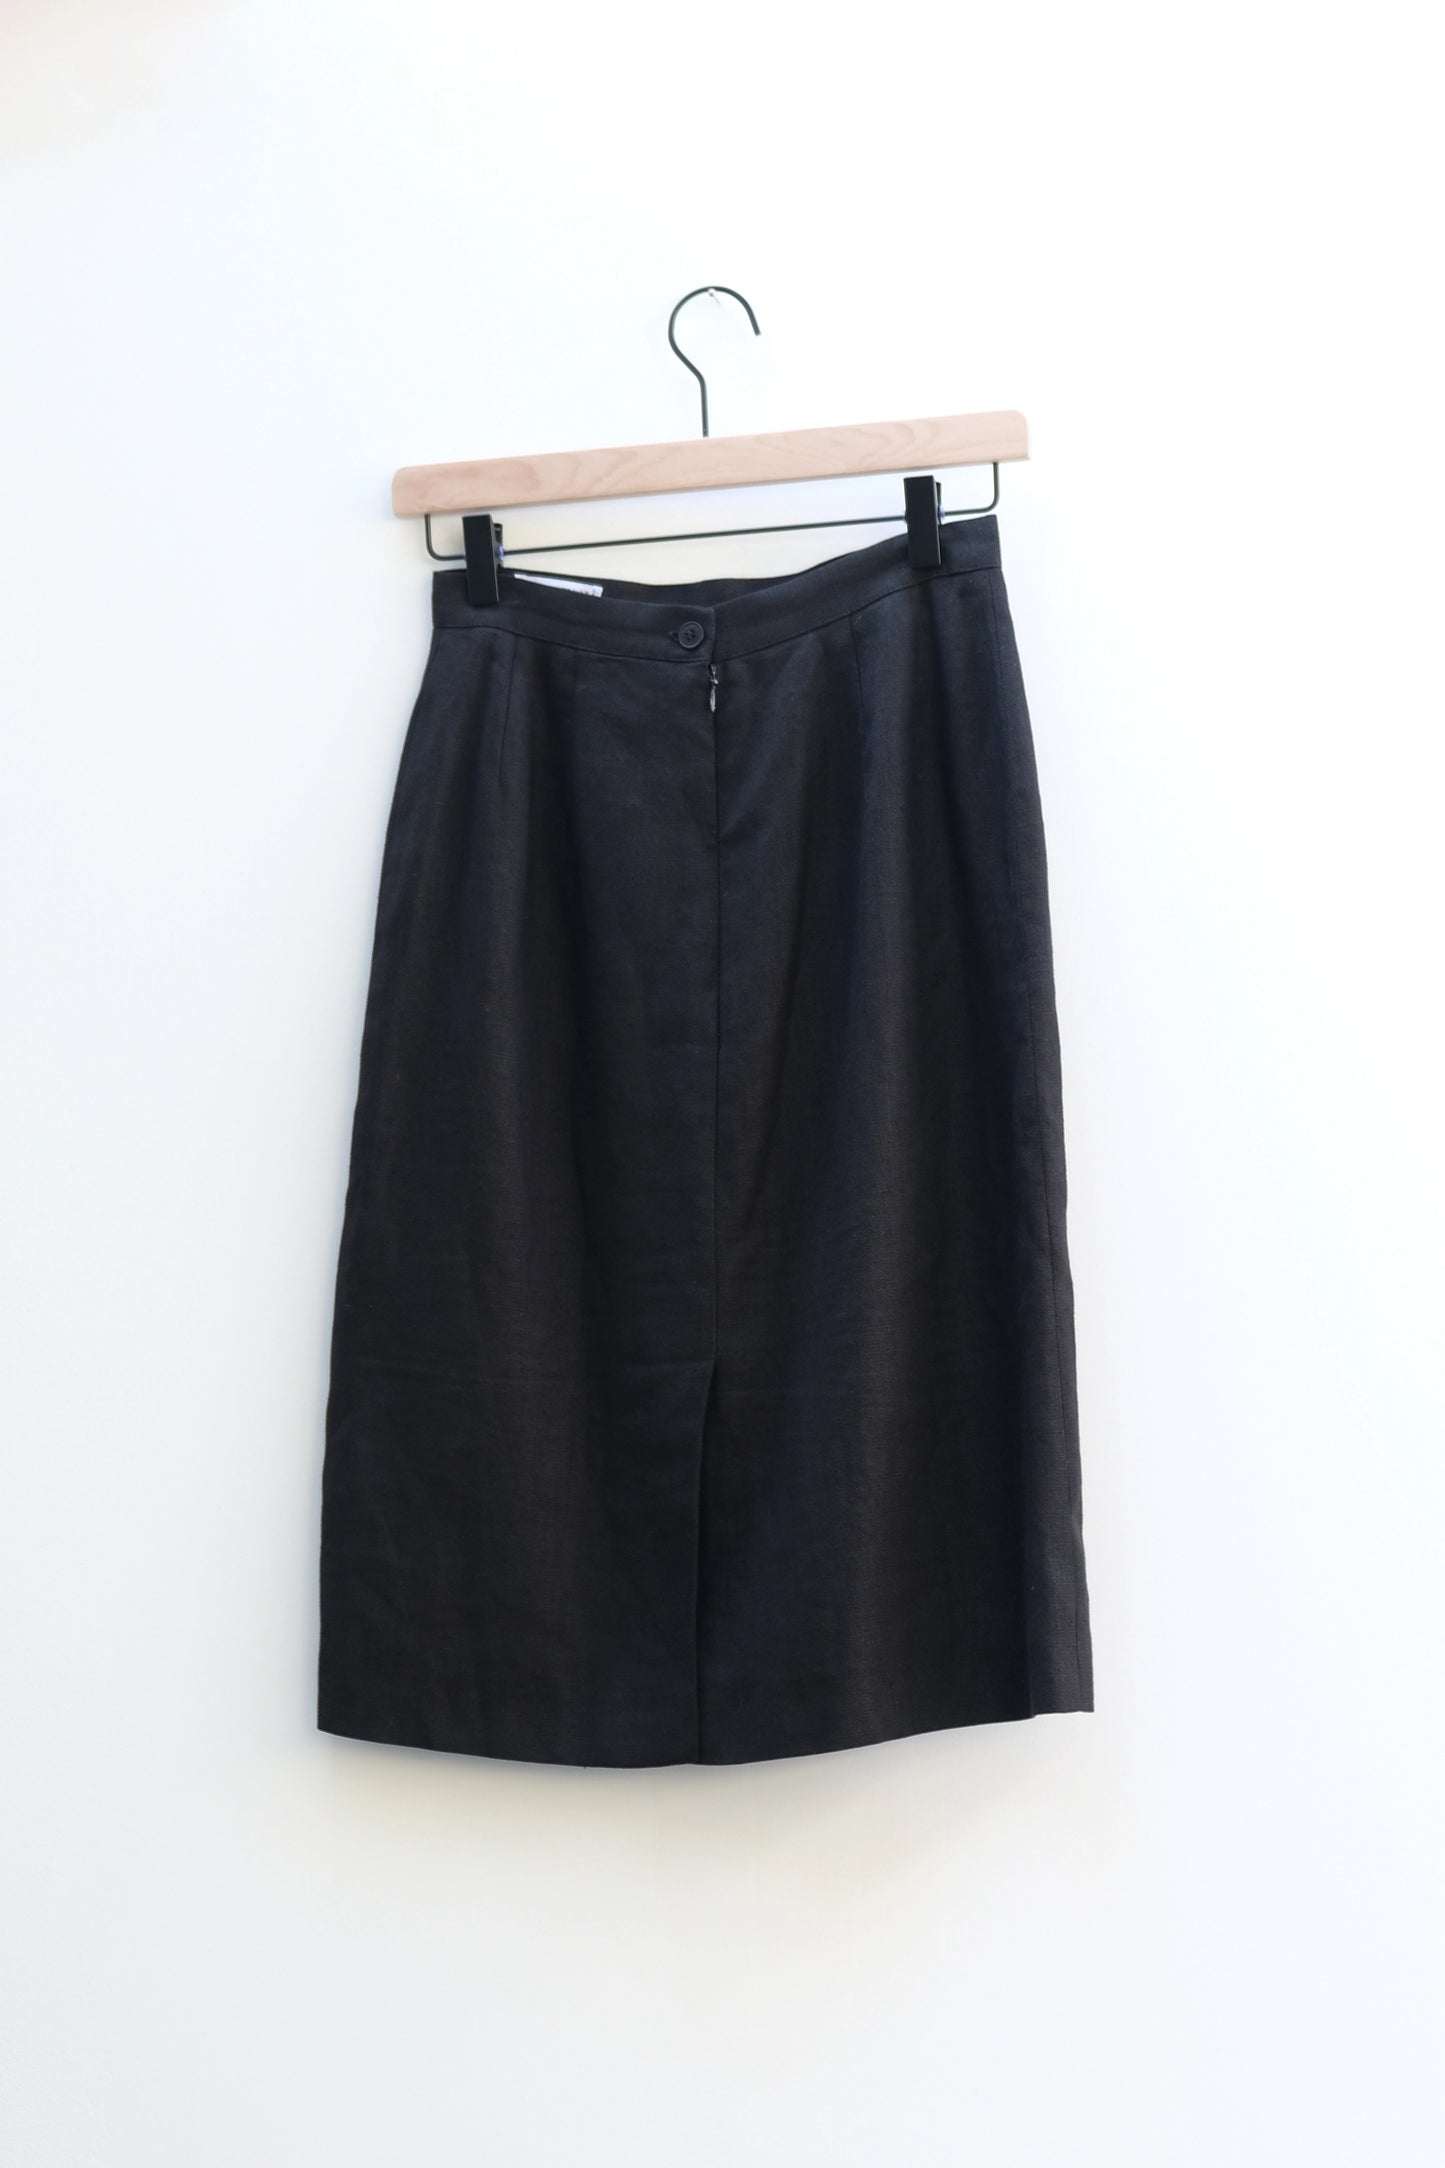 Giorgio Armani Black Linen High Waisted Knee Length Pencil Skirt US 4, 90's